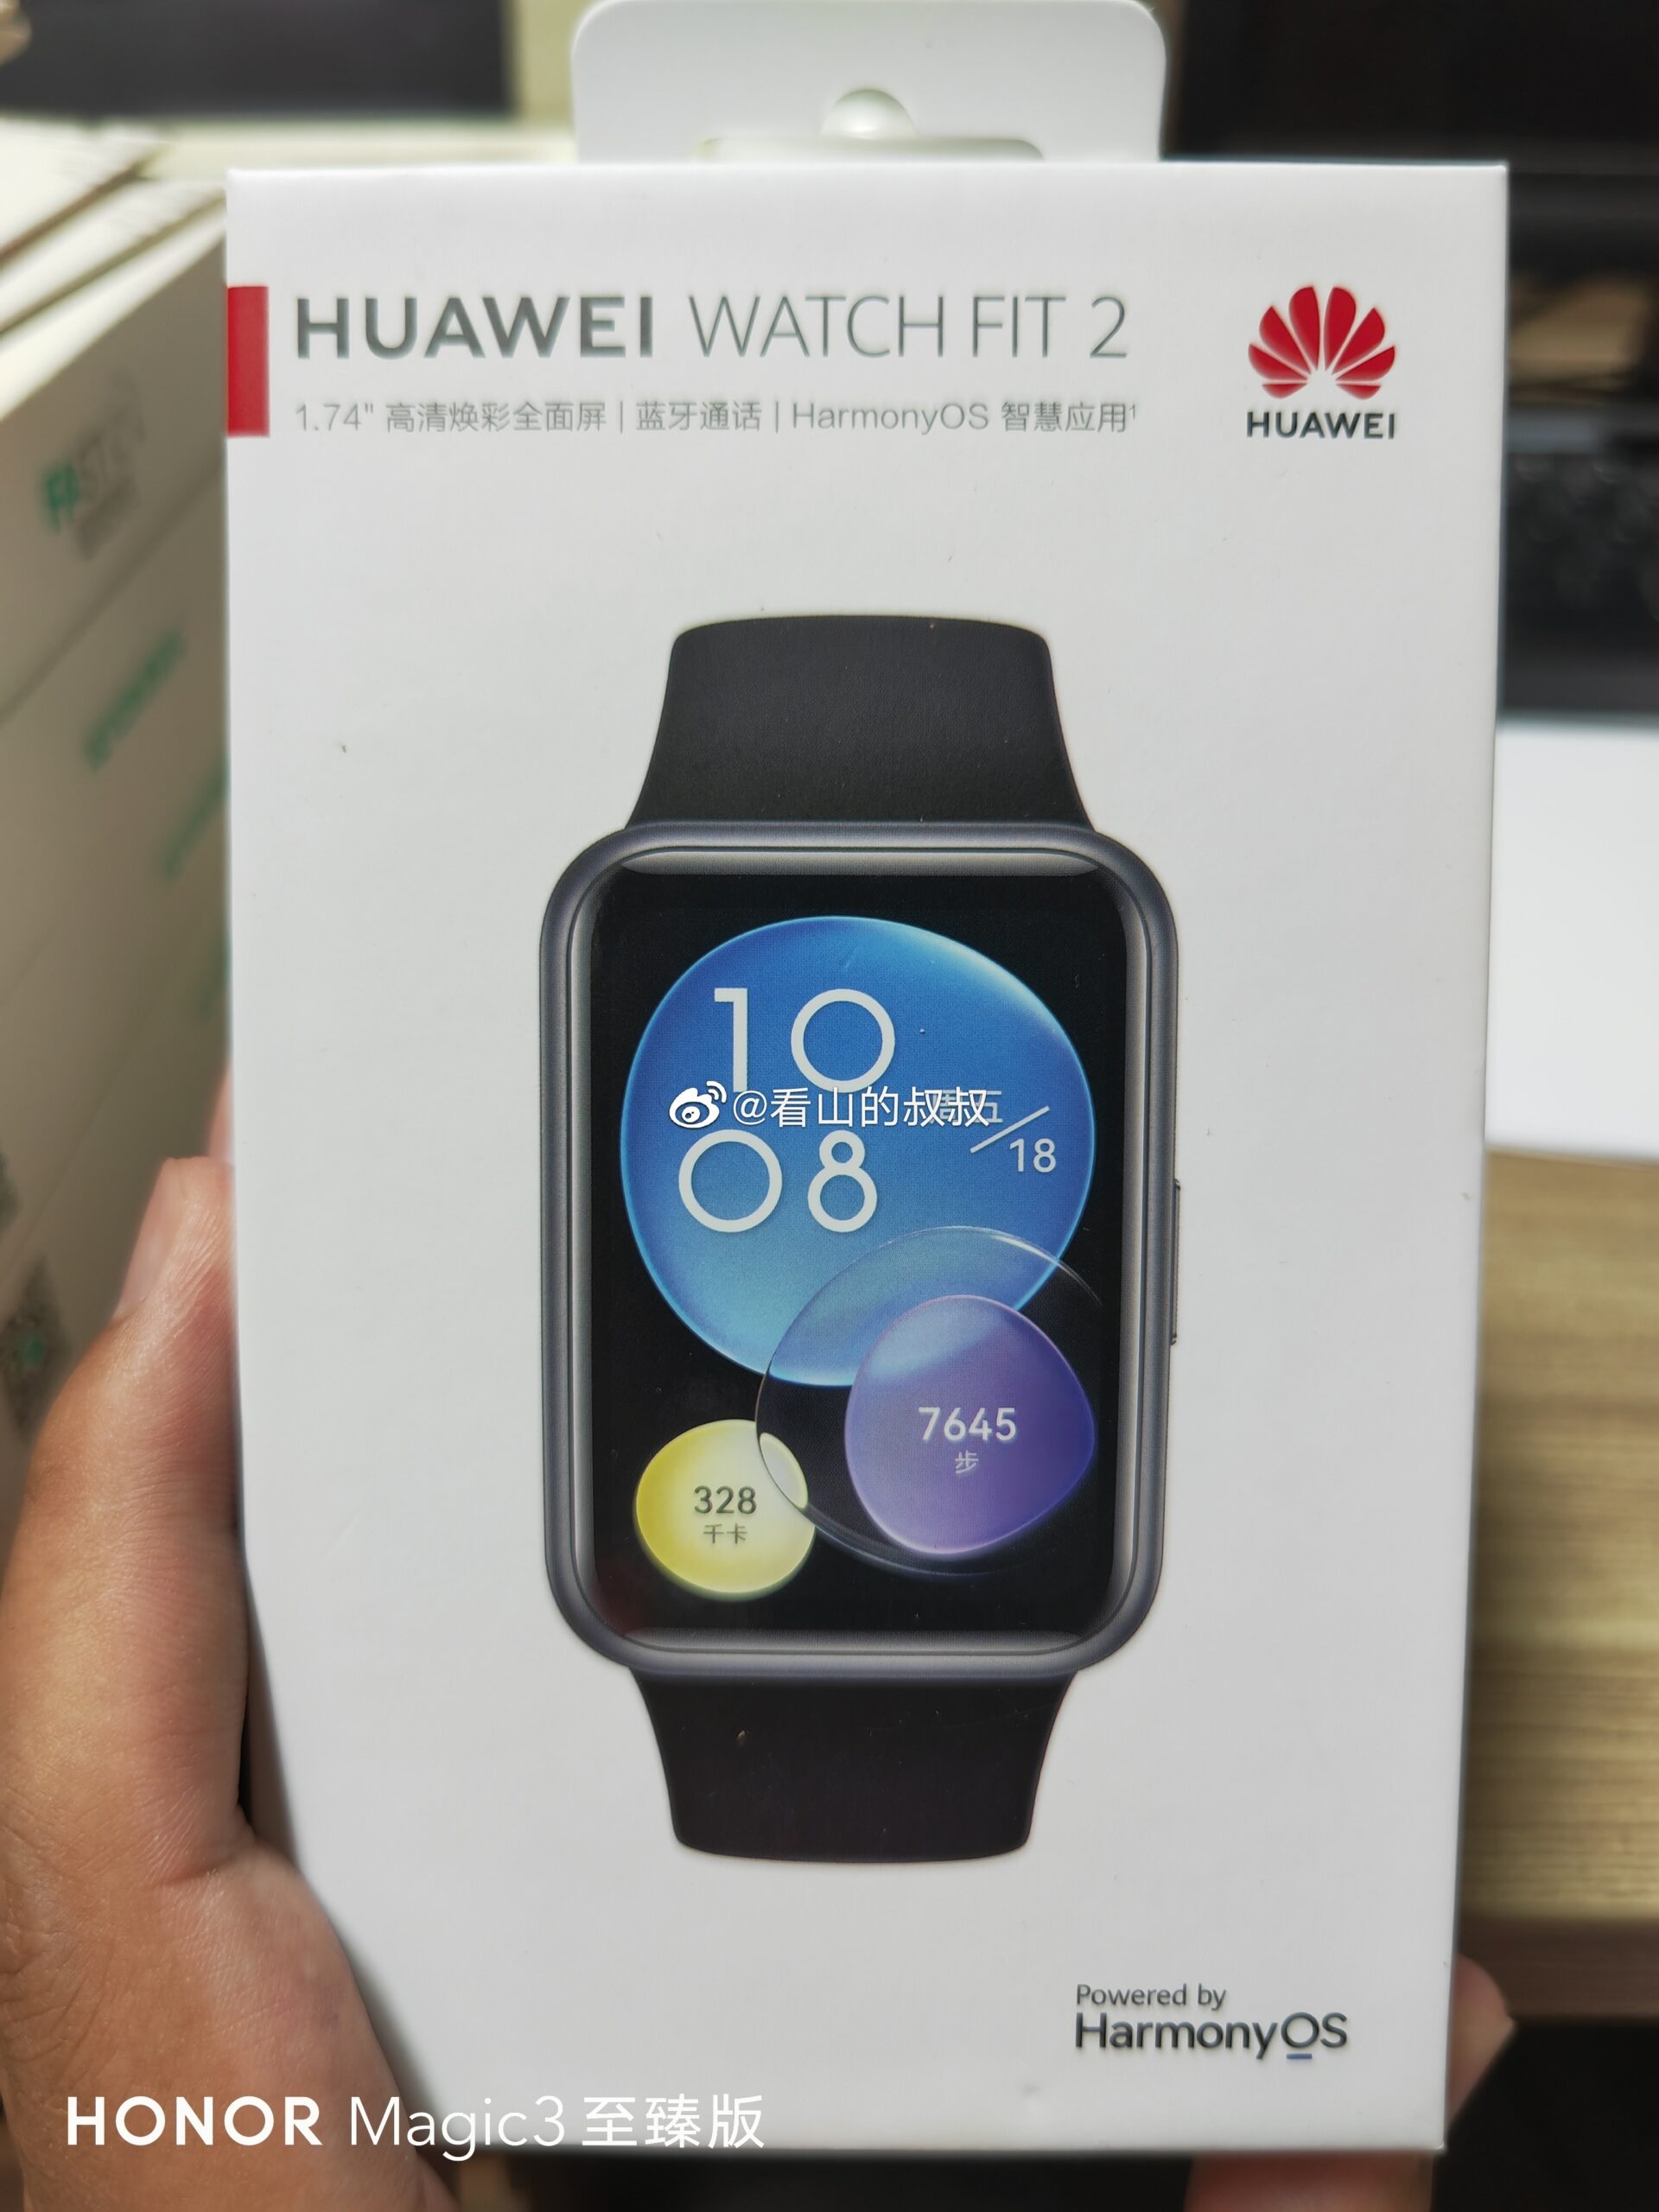 Huawei Watch Fit 2 leaked